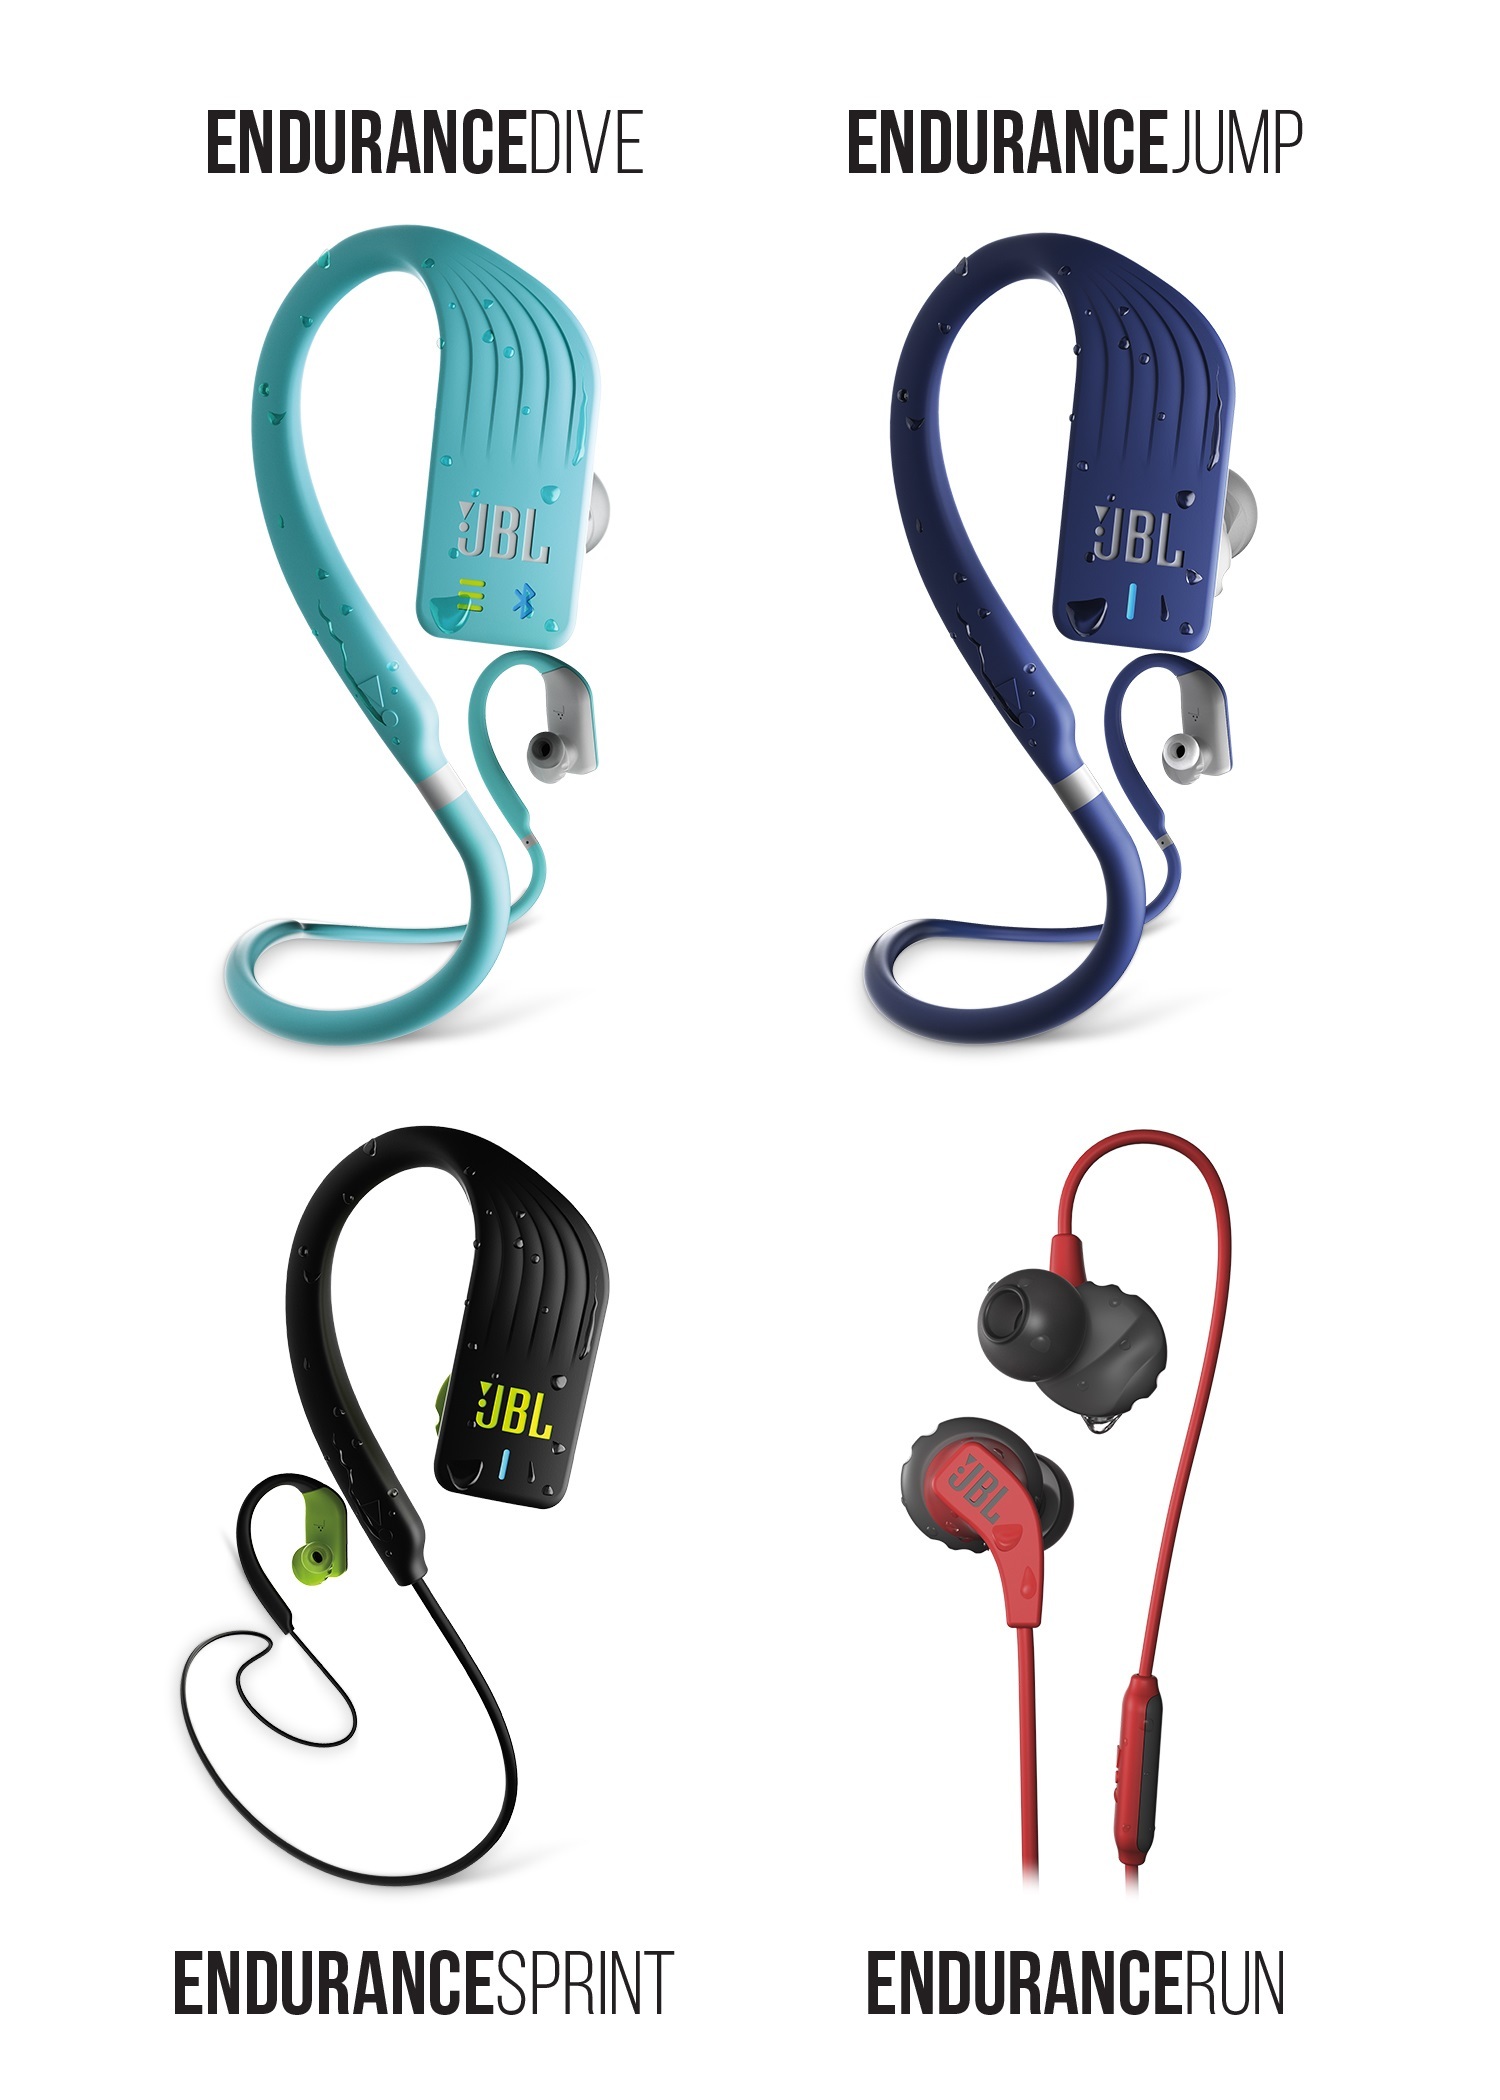 RUN, SPRINT, JUMP, DIVE: JBL® Introduces Endurance Headphones Every Sport | Business Wire